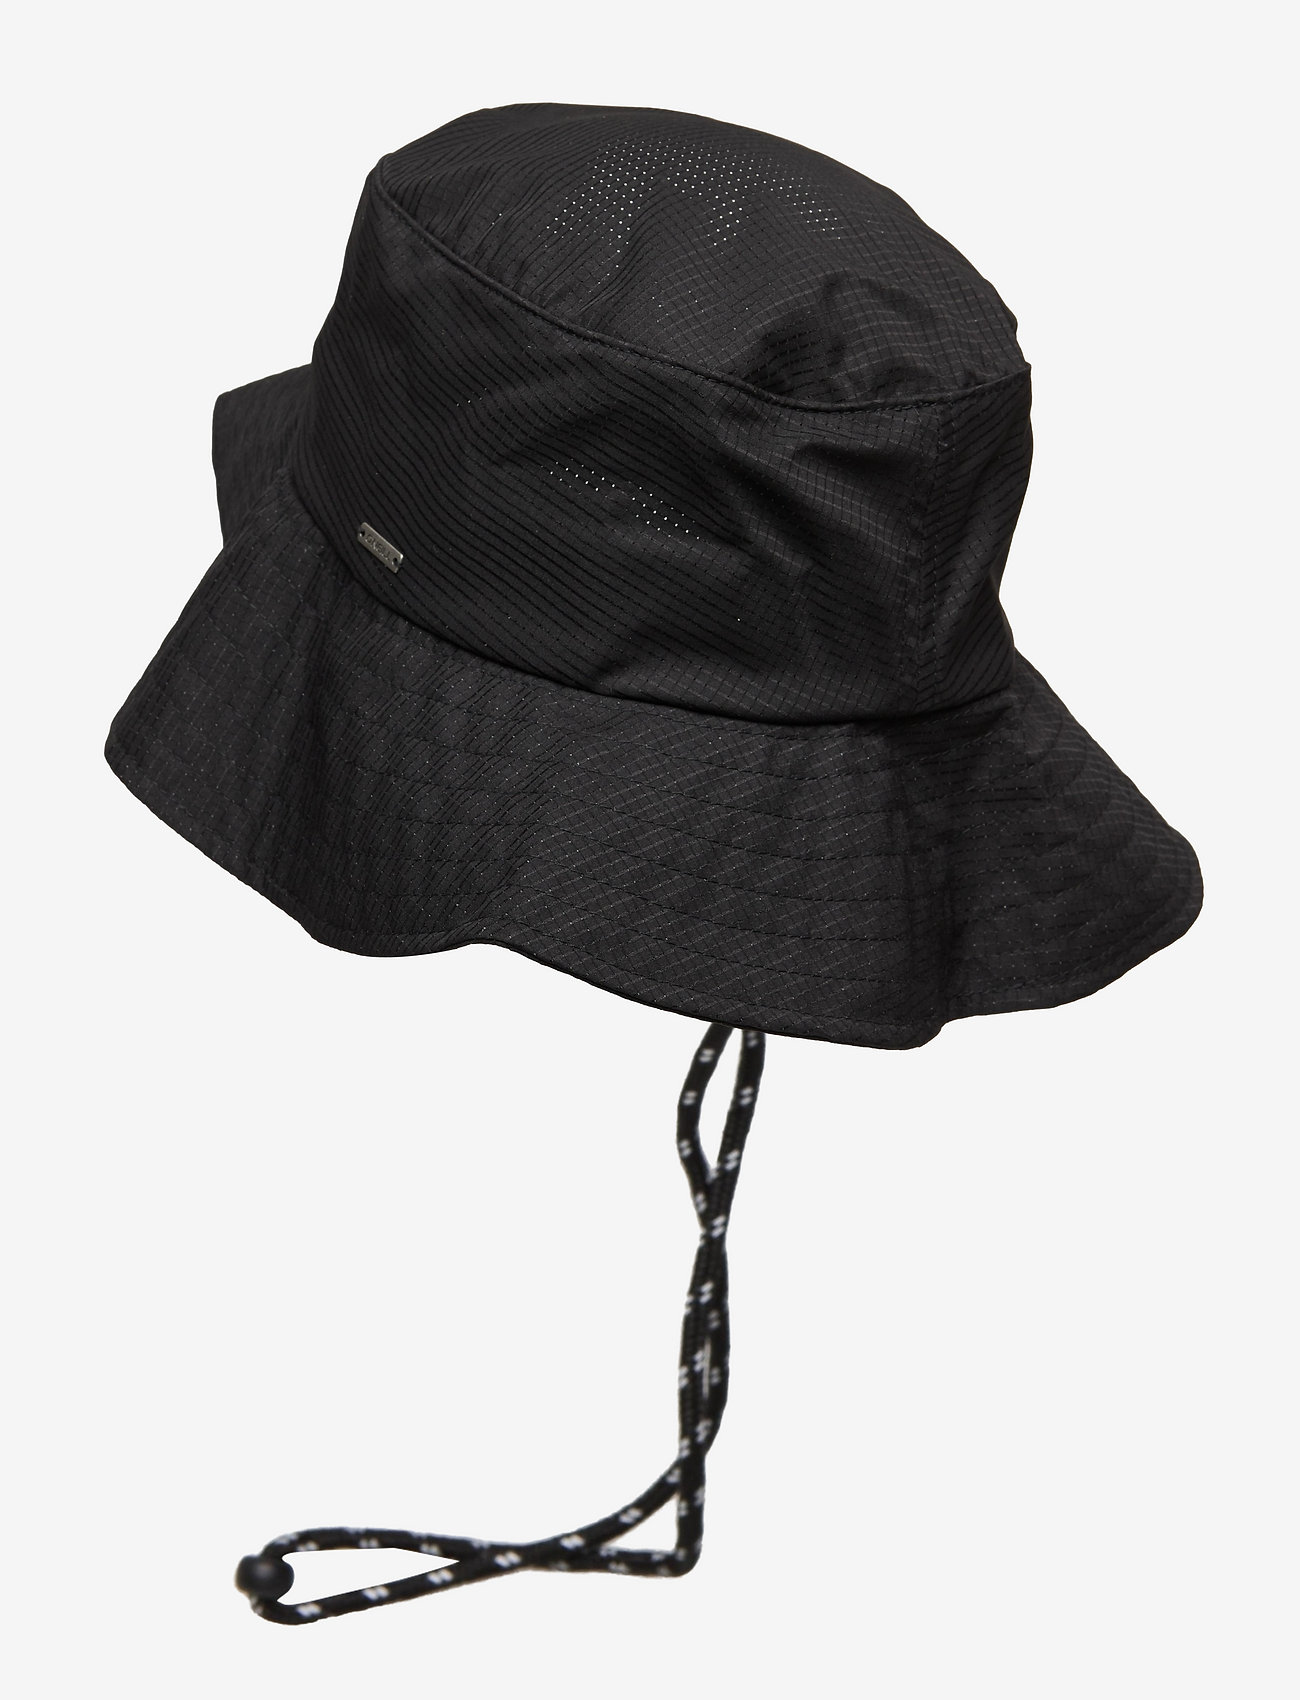 O'neill Hybrid Bucket Hat - Bucket hats | Boozt.com